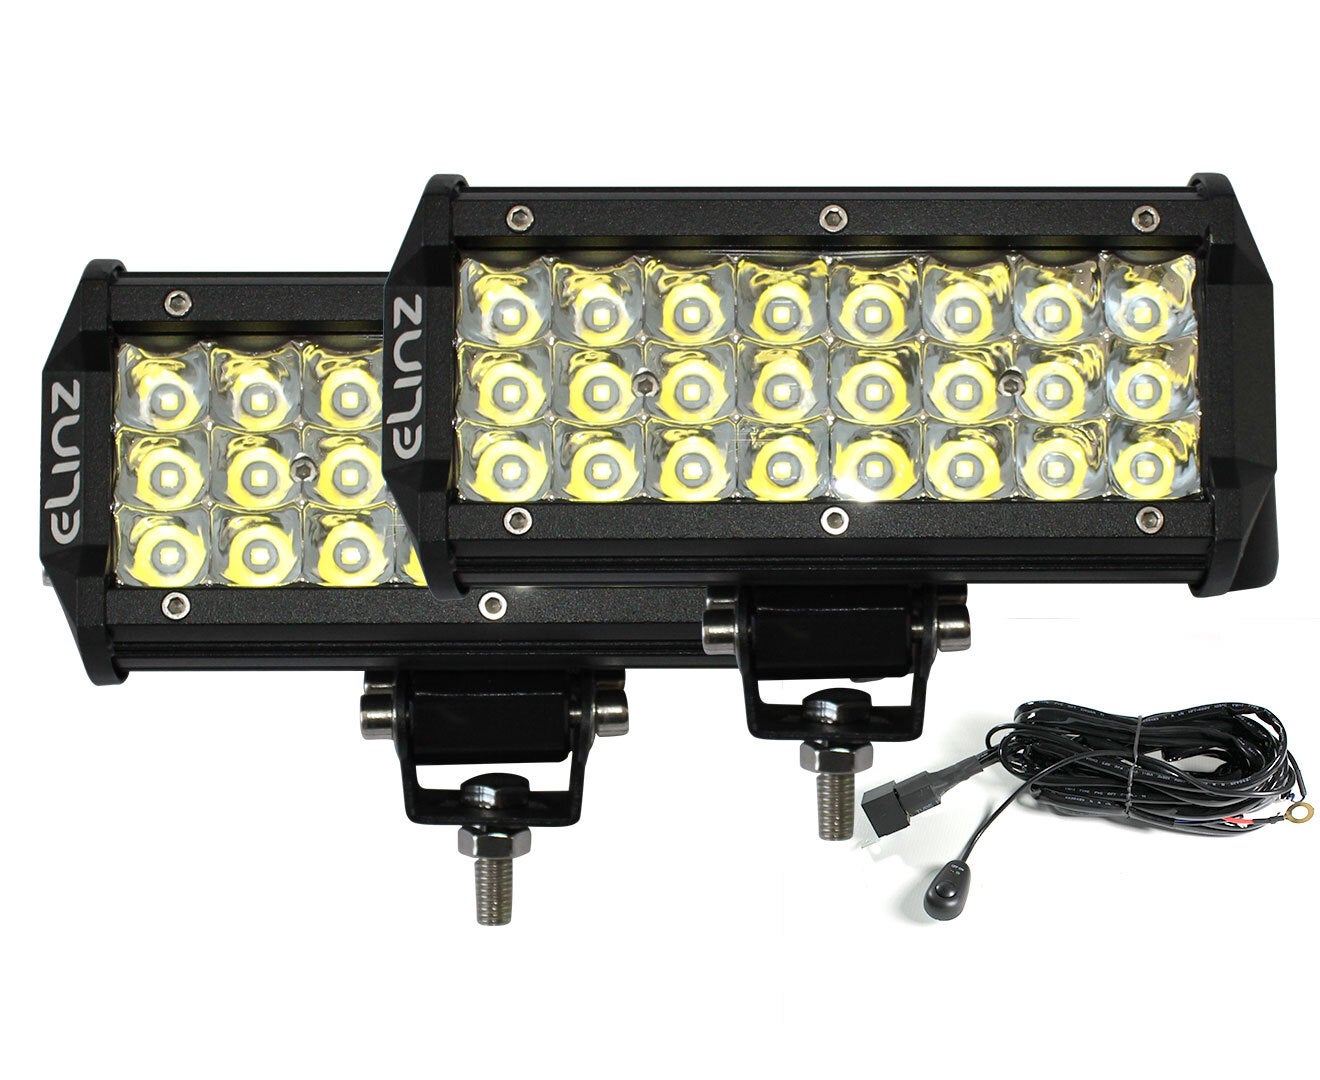 Elinz 2x 7" LED Work Driving Light Bar Philips Spot Offroad 3 Rows 12V 24V 4WD Truck